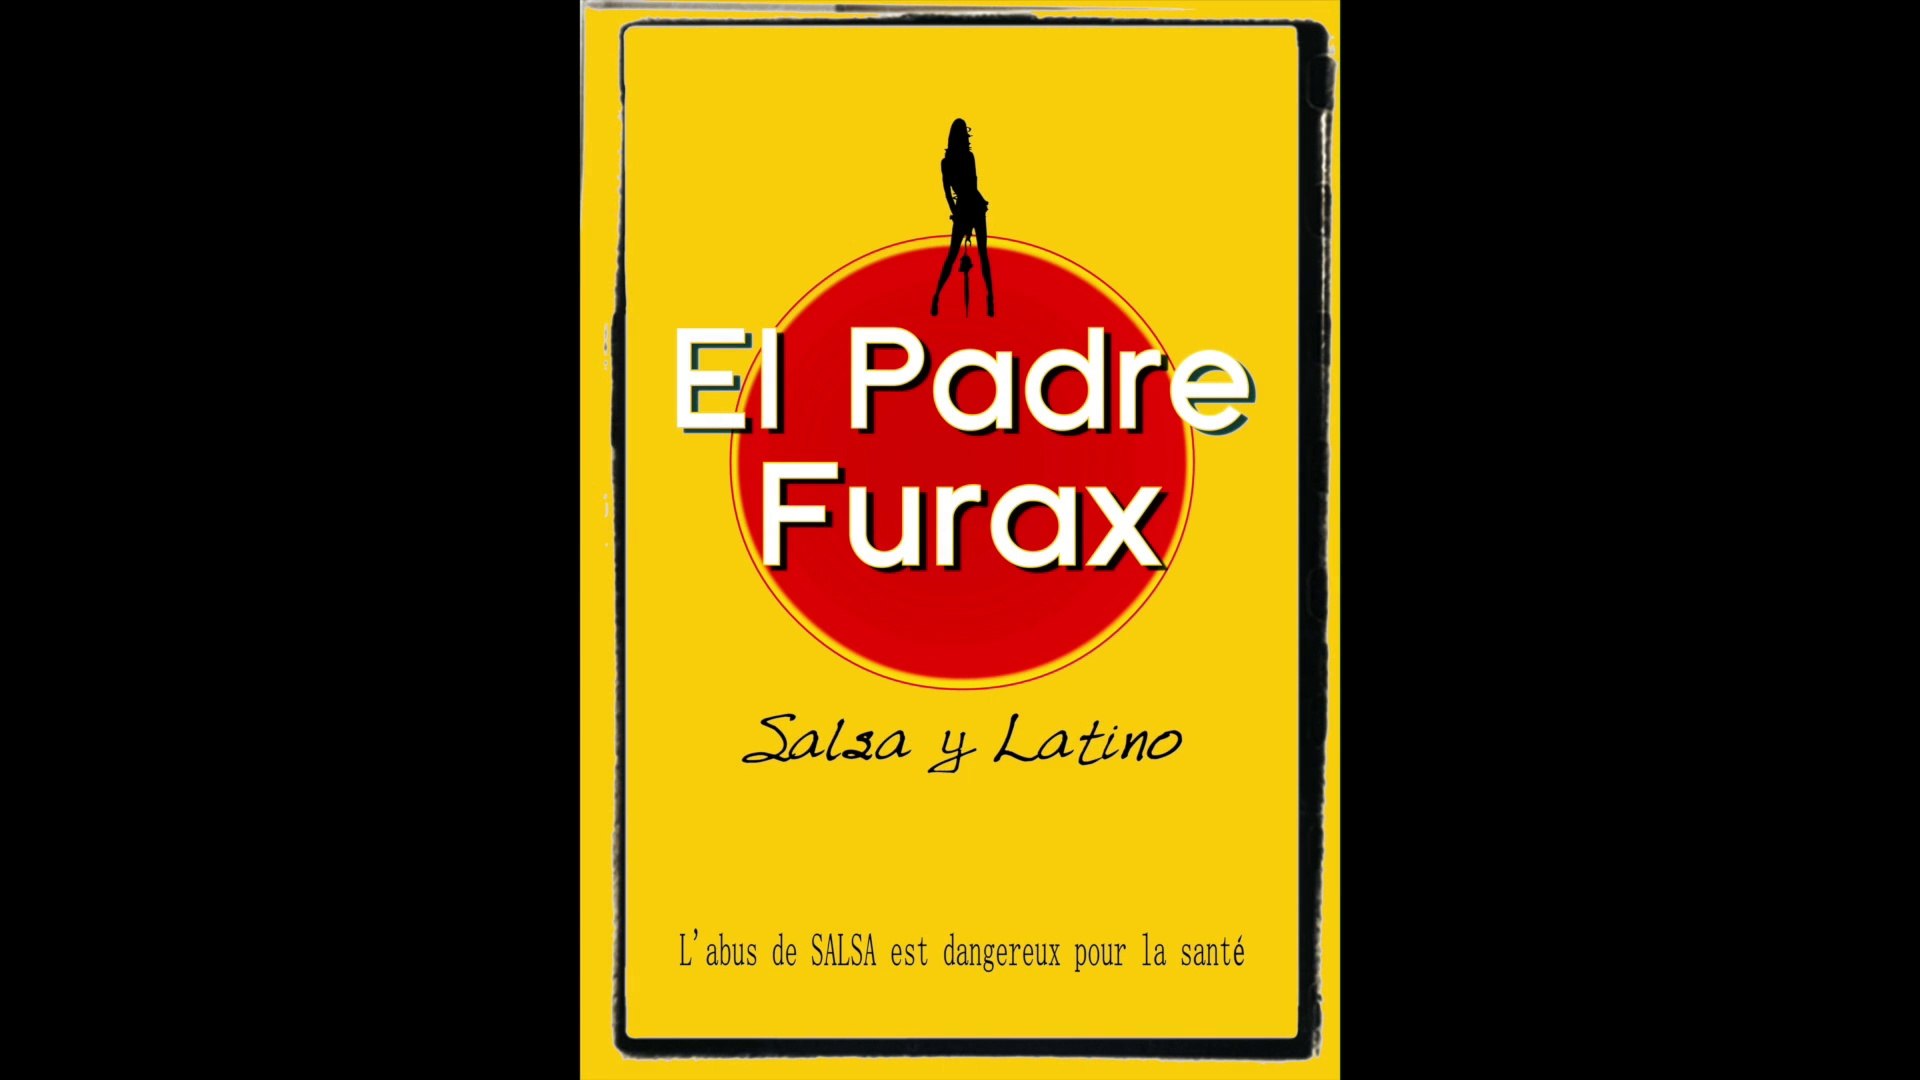 El Padre Furax, groupe de Salsa - Vidéo Dailymotion